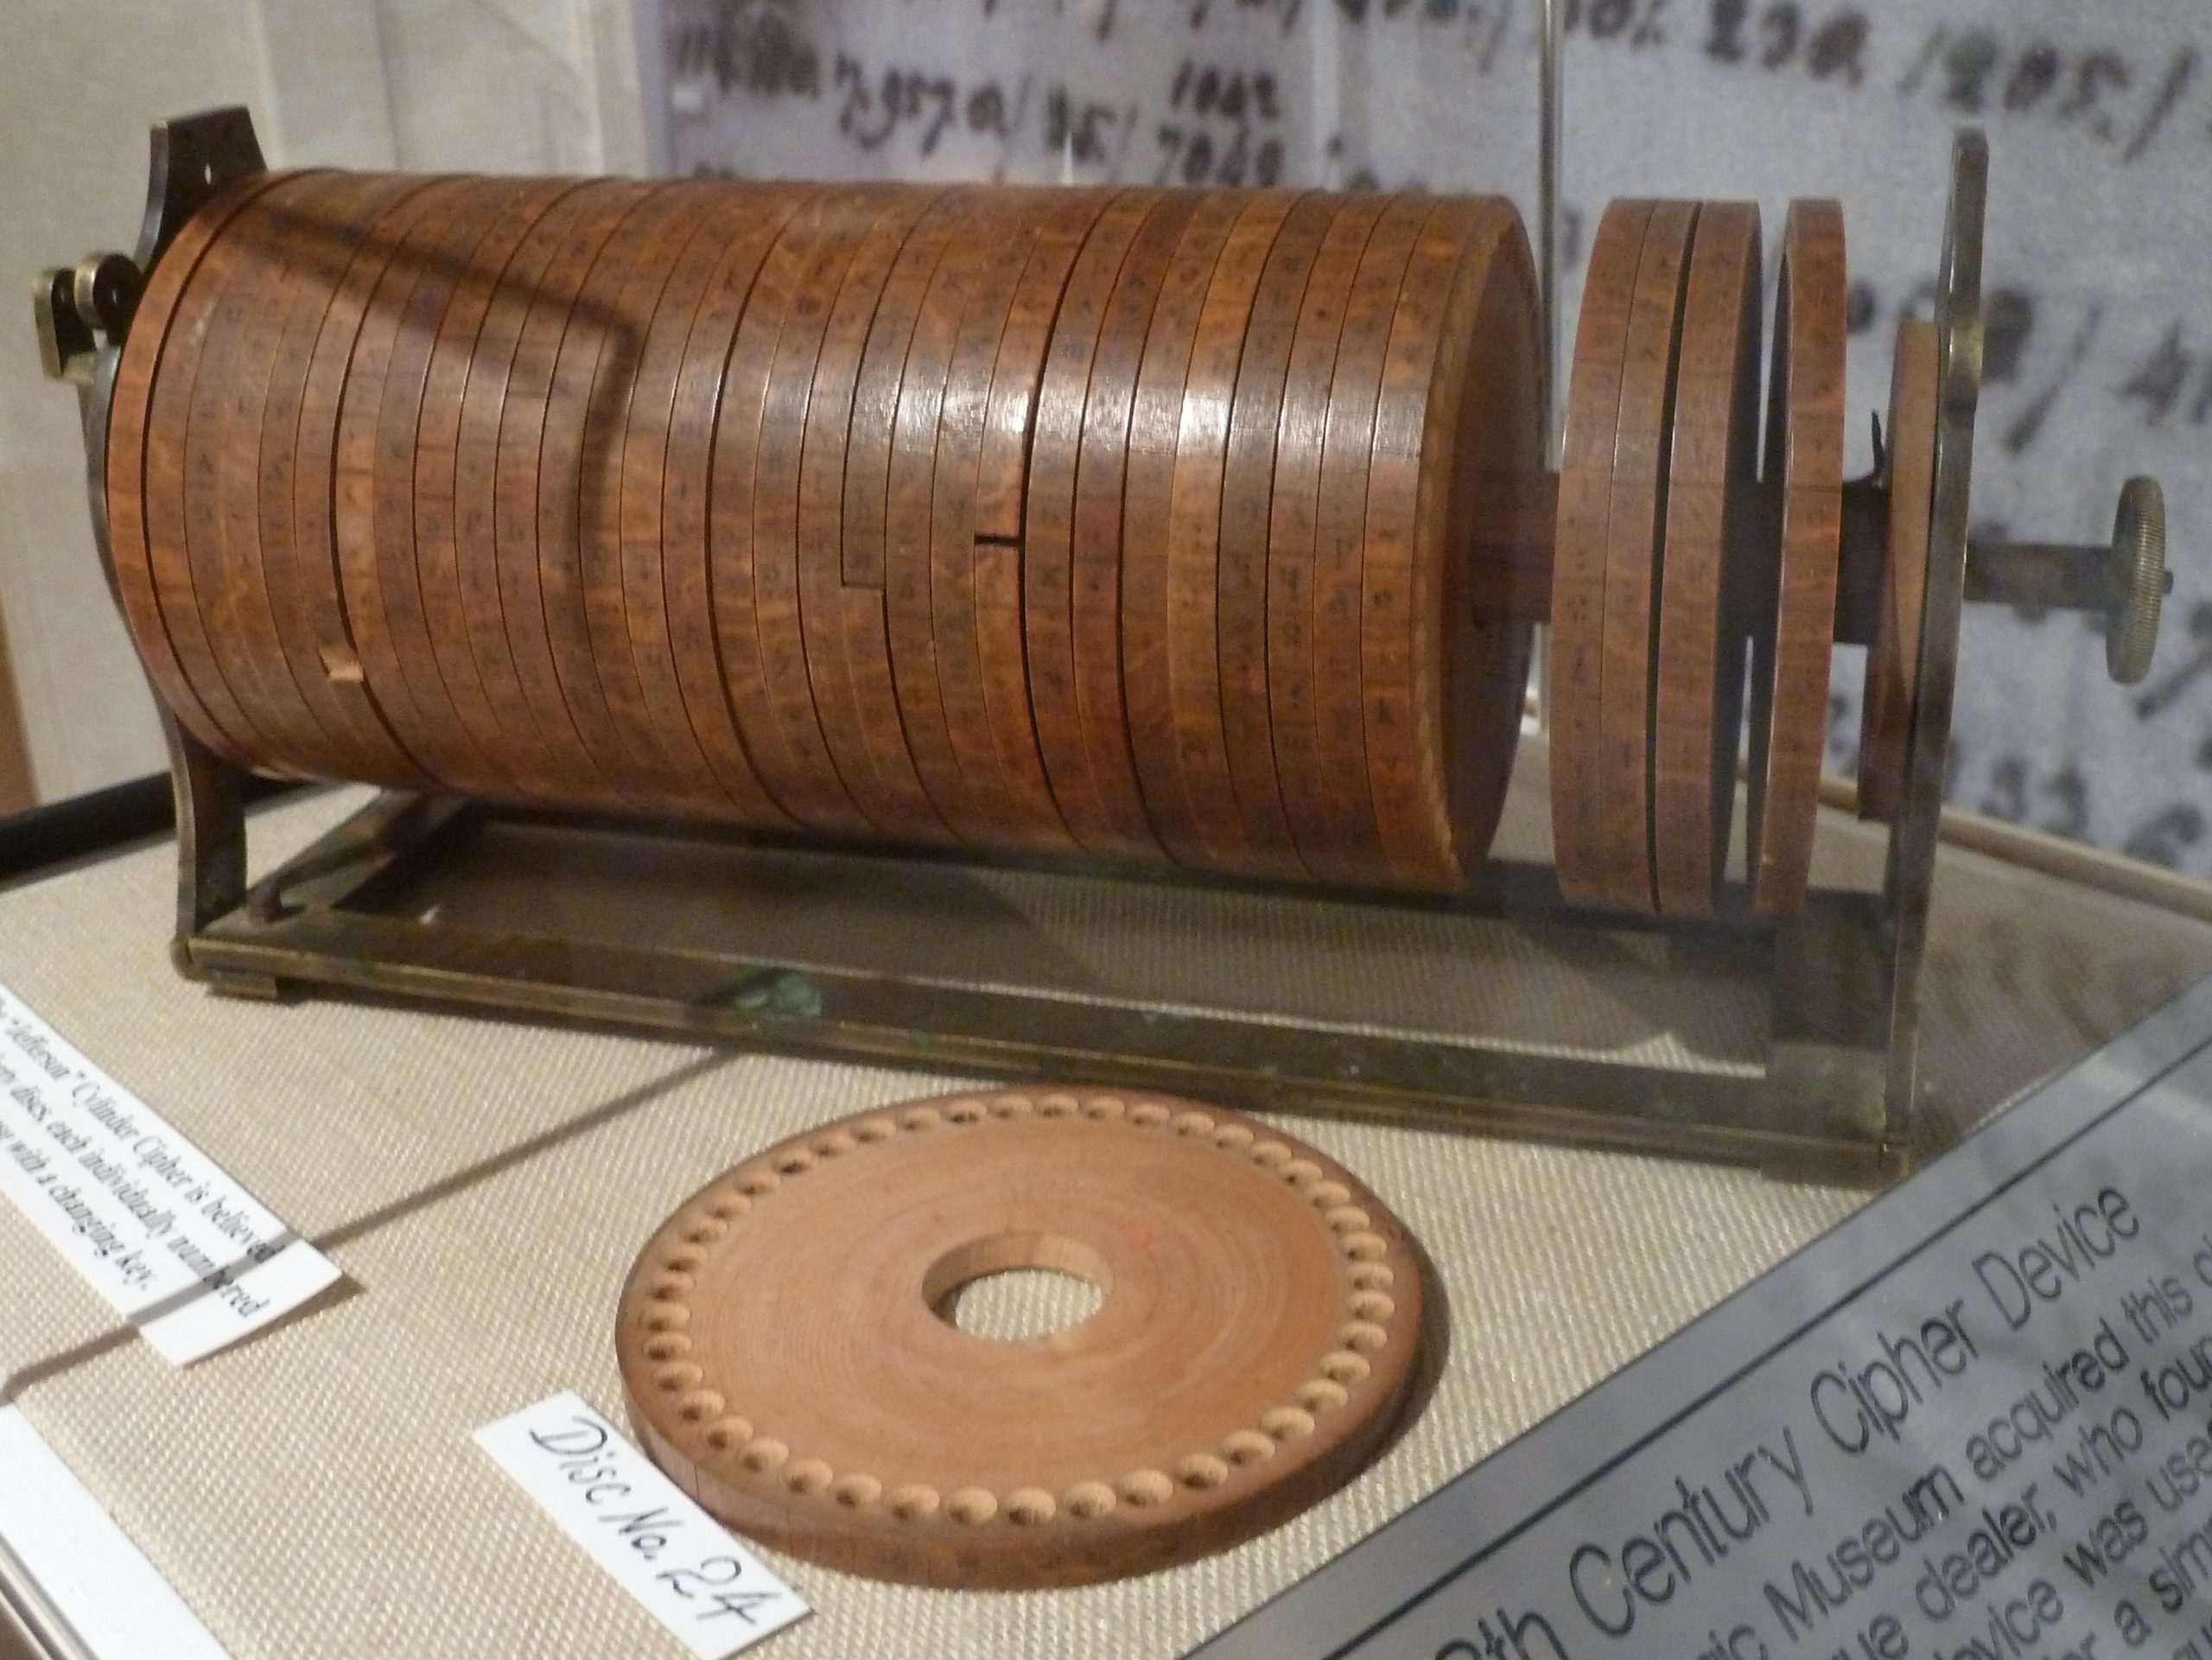 Jefferson disk | wheel cypher | دیسک یا رمز چرخ جفرسون | علوم نوین امیرکبیر